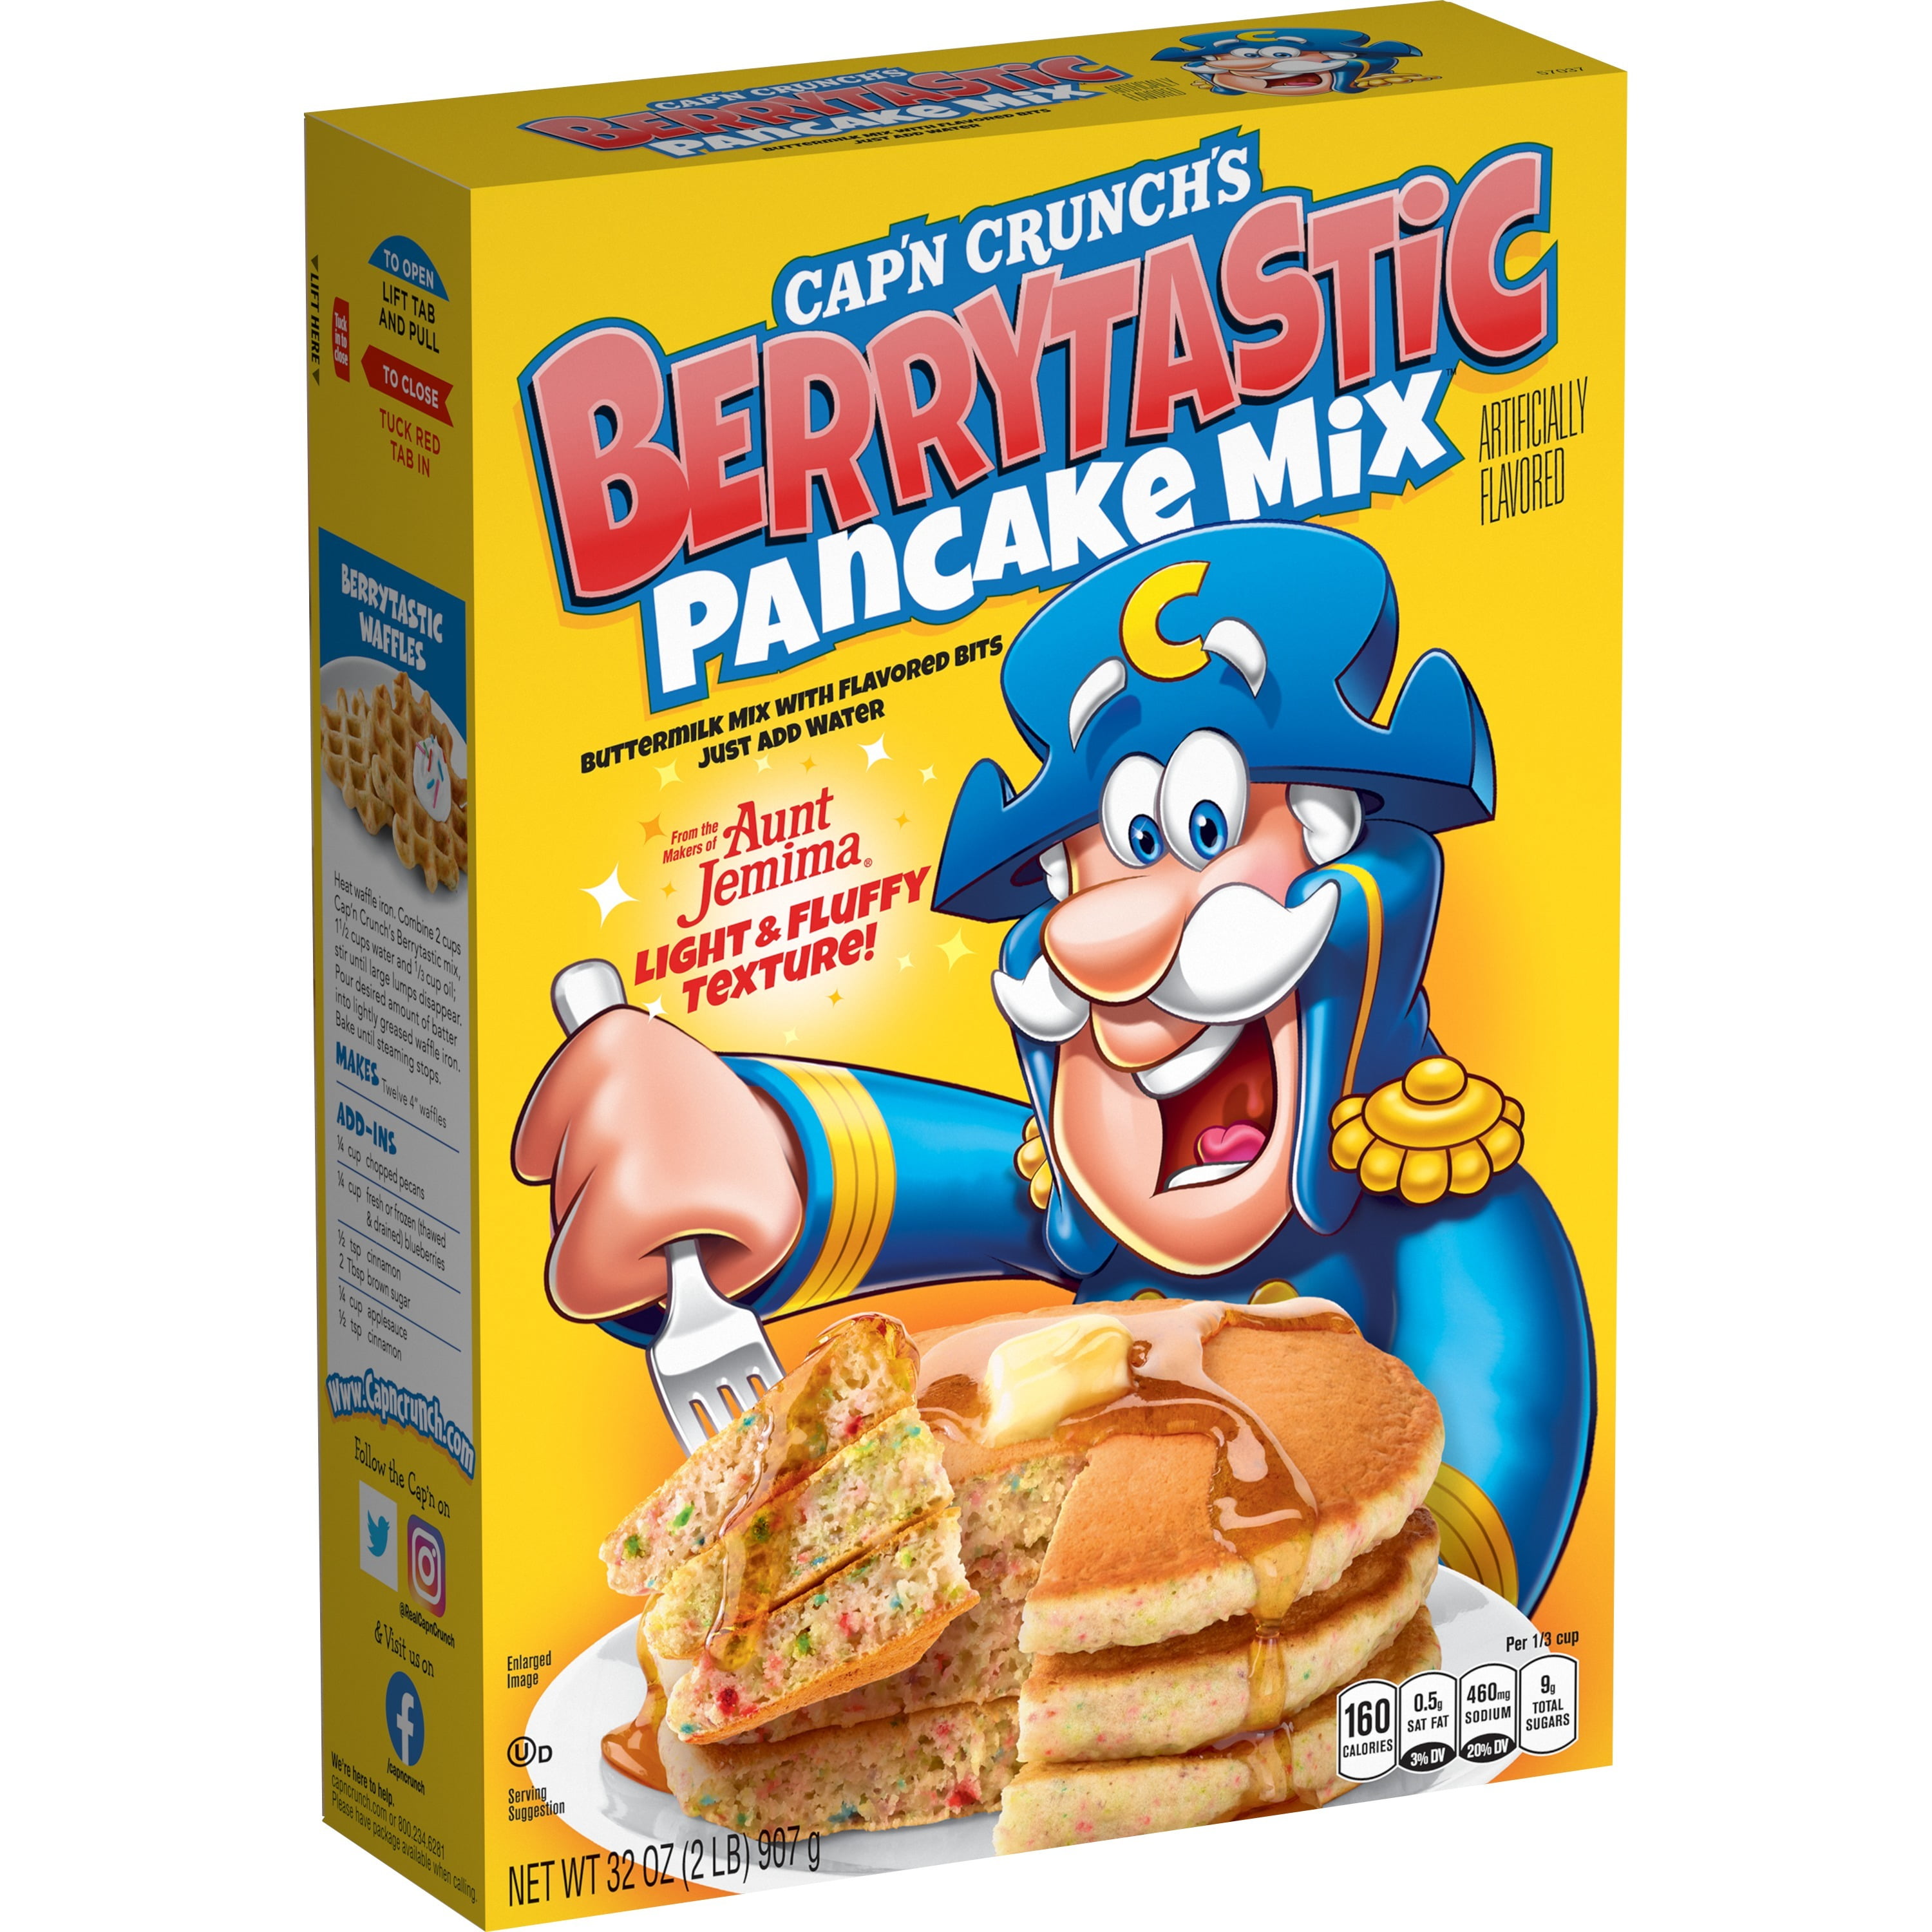 Cap n Crunch Berrytastic Pancake Mix, 32 oz